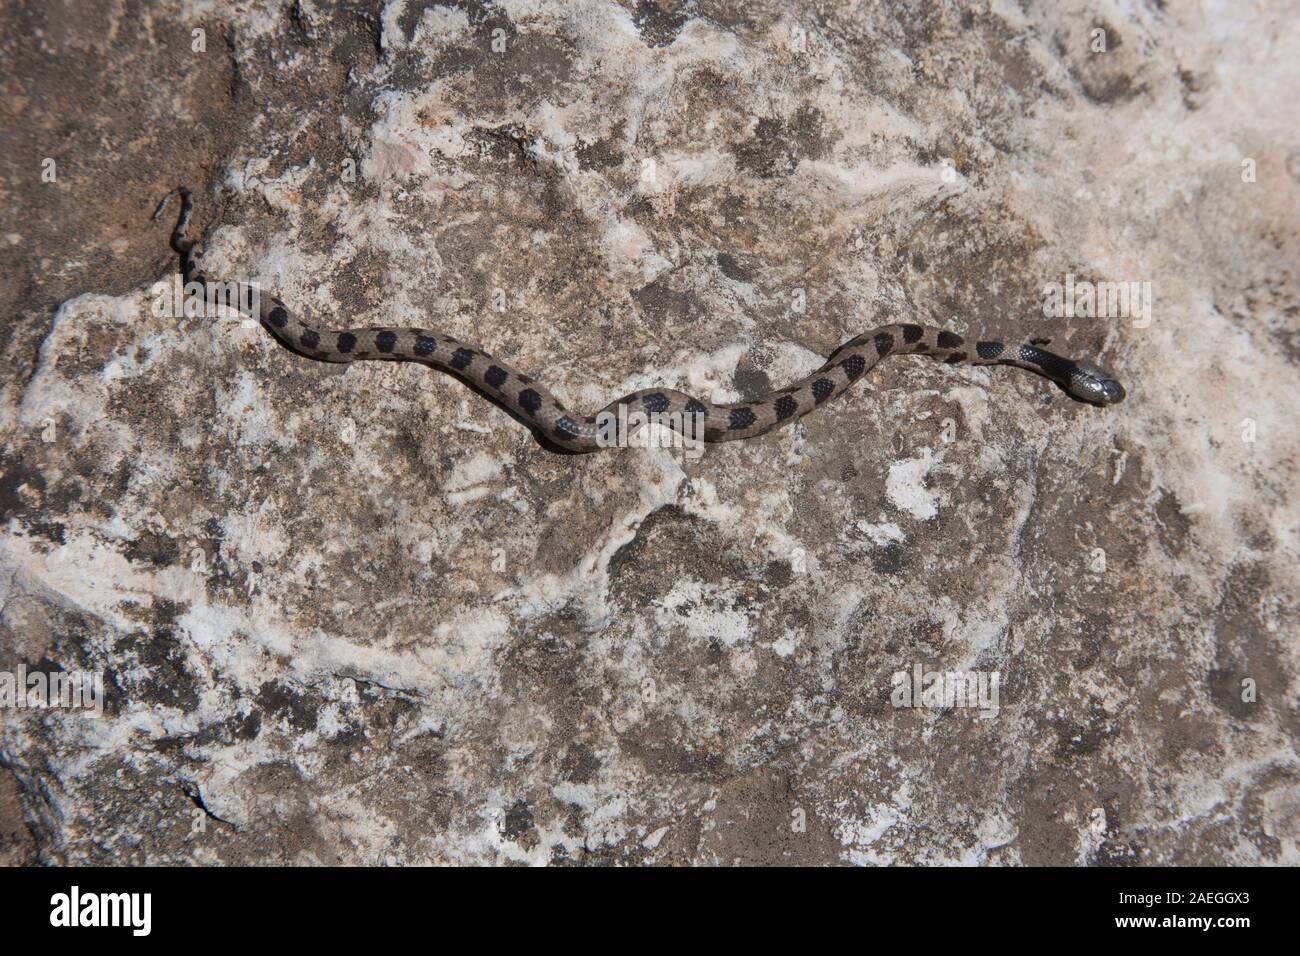 The European cat snake (Telescopus fallax), (Subspecies Telescopus fallax syriacus) also known as the Soosan snake, is a venomous colubrid snake endem Stock Photo